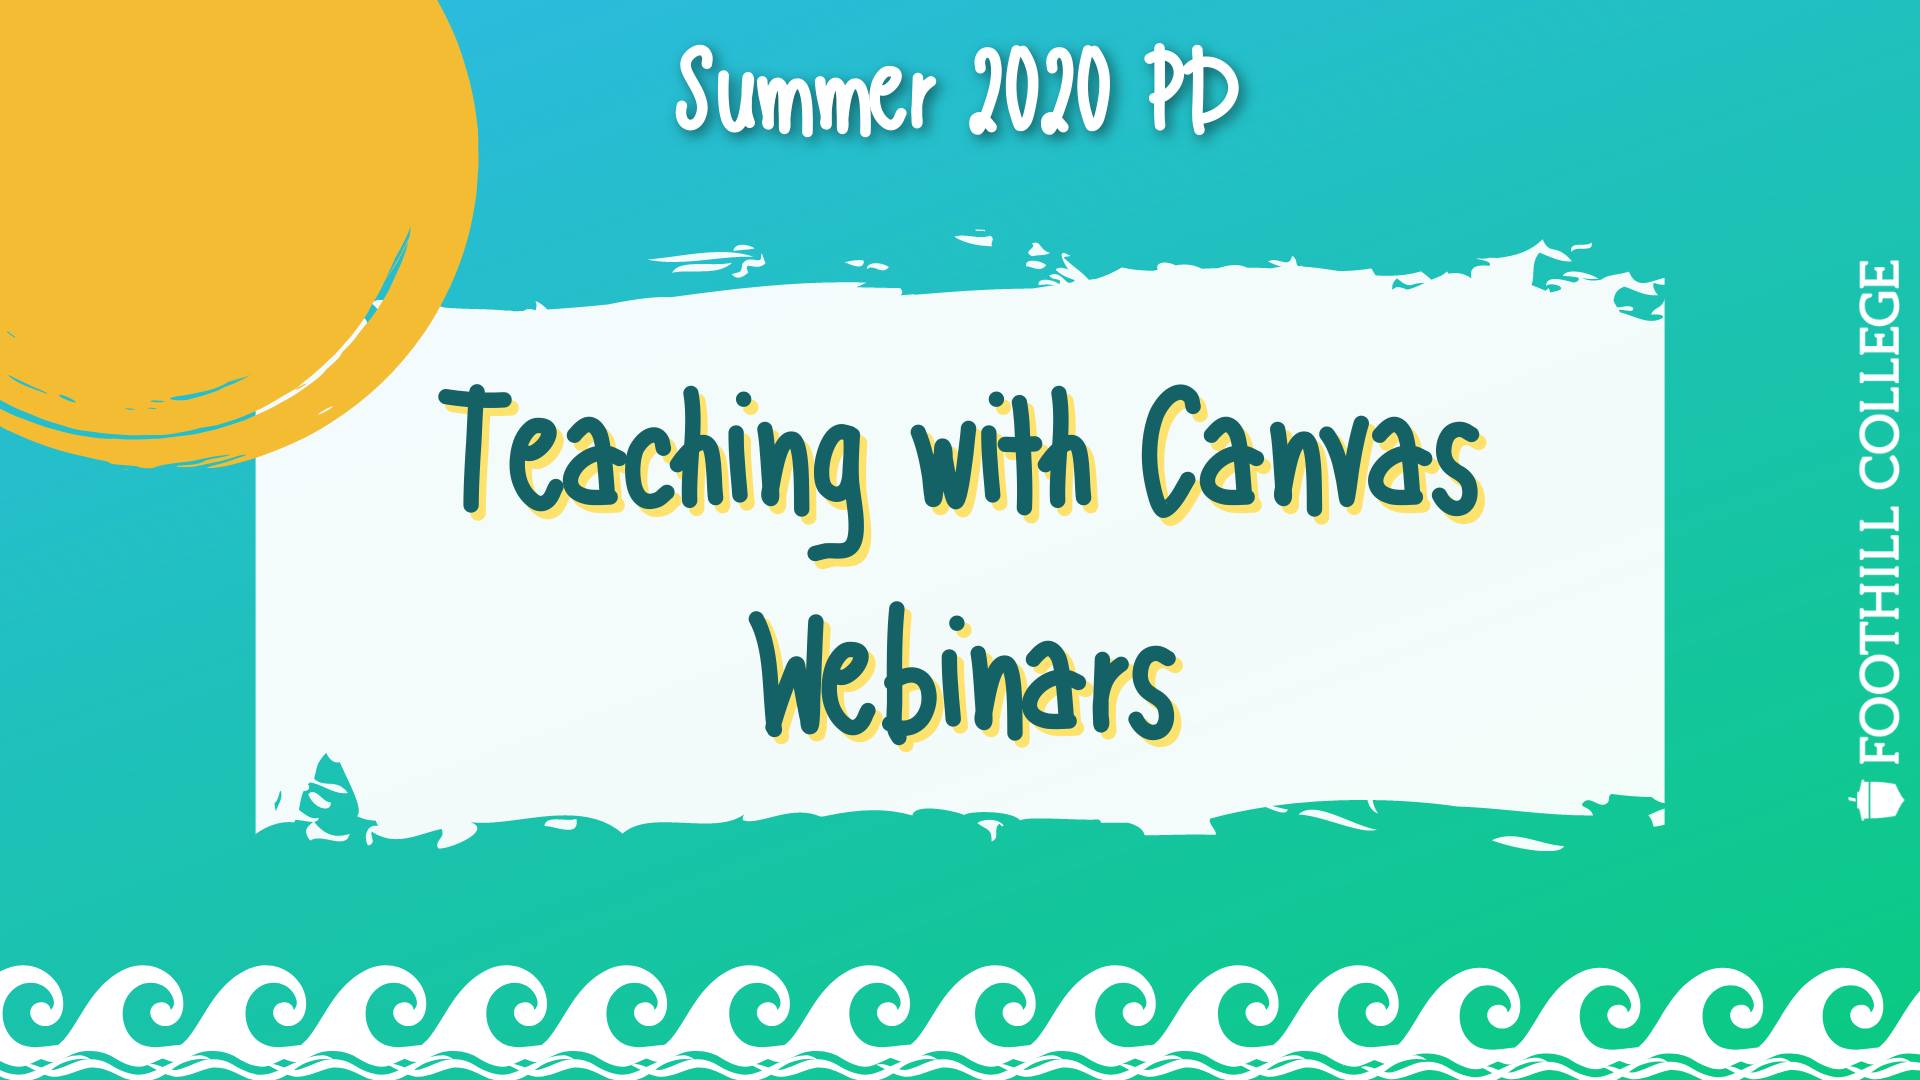 Teaching with Canvas webinars